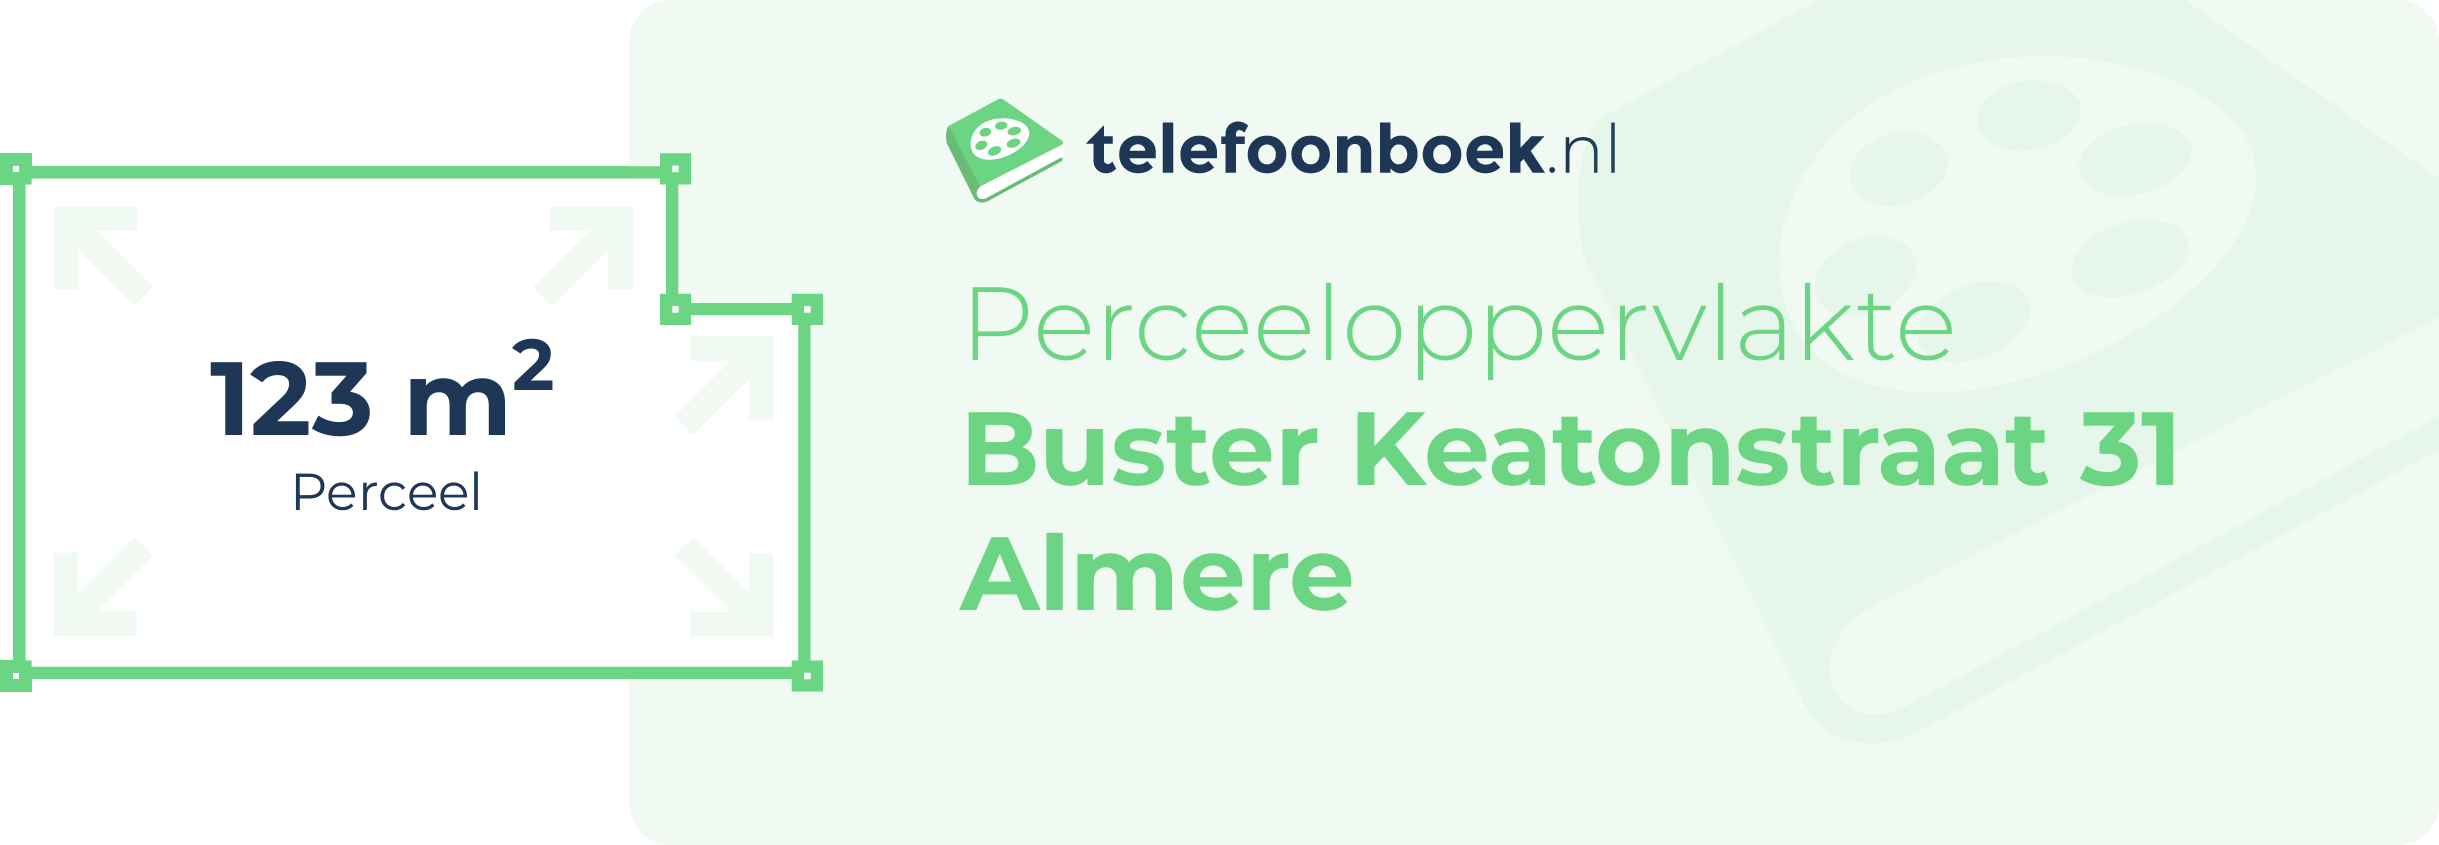 Perceeloppervlakte Buster Keatonstraat 31 Almere